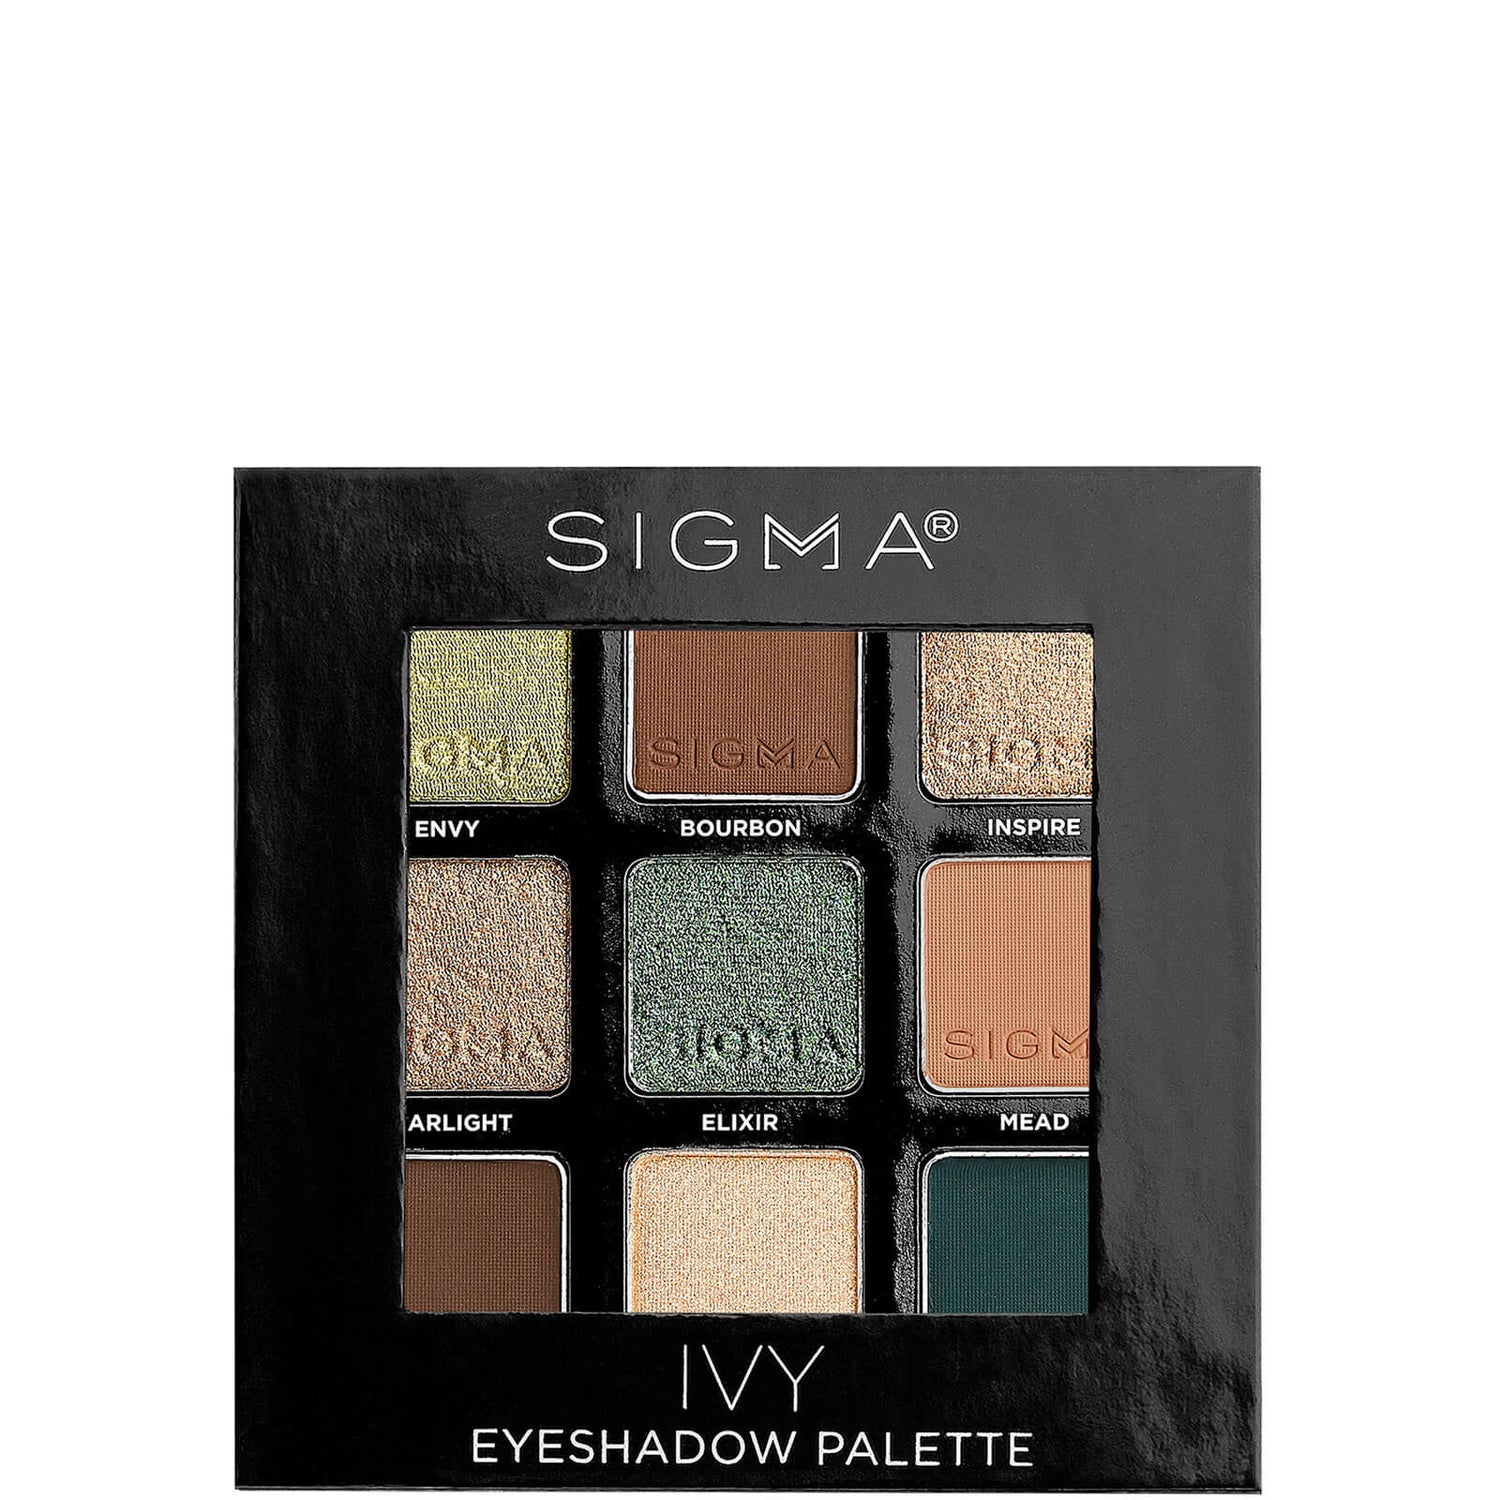 Sigma Ivy Eyeshadow Palette